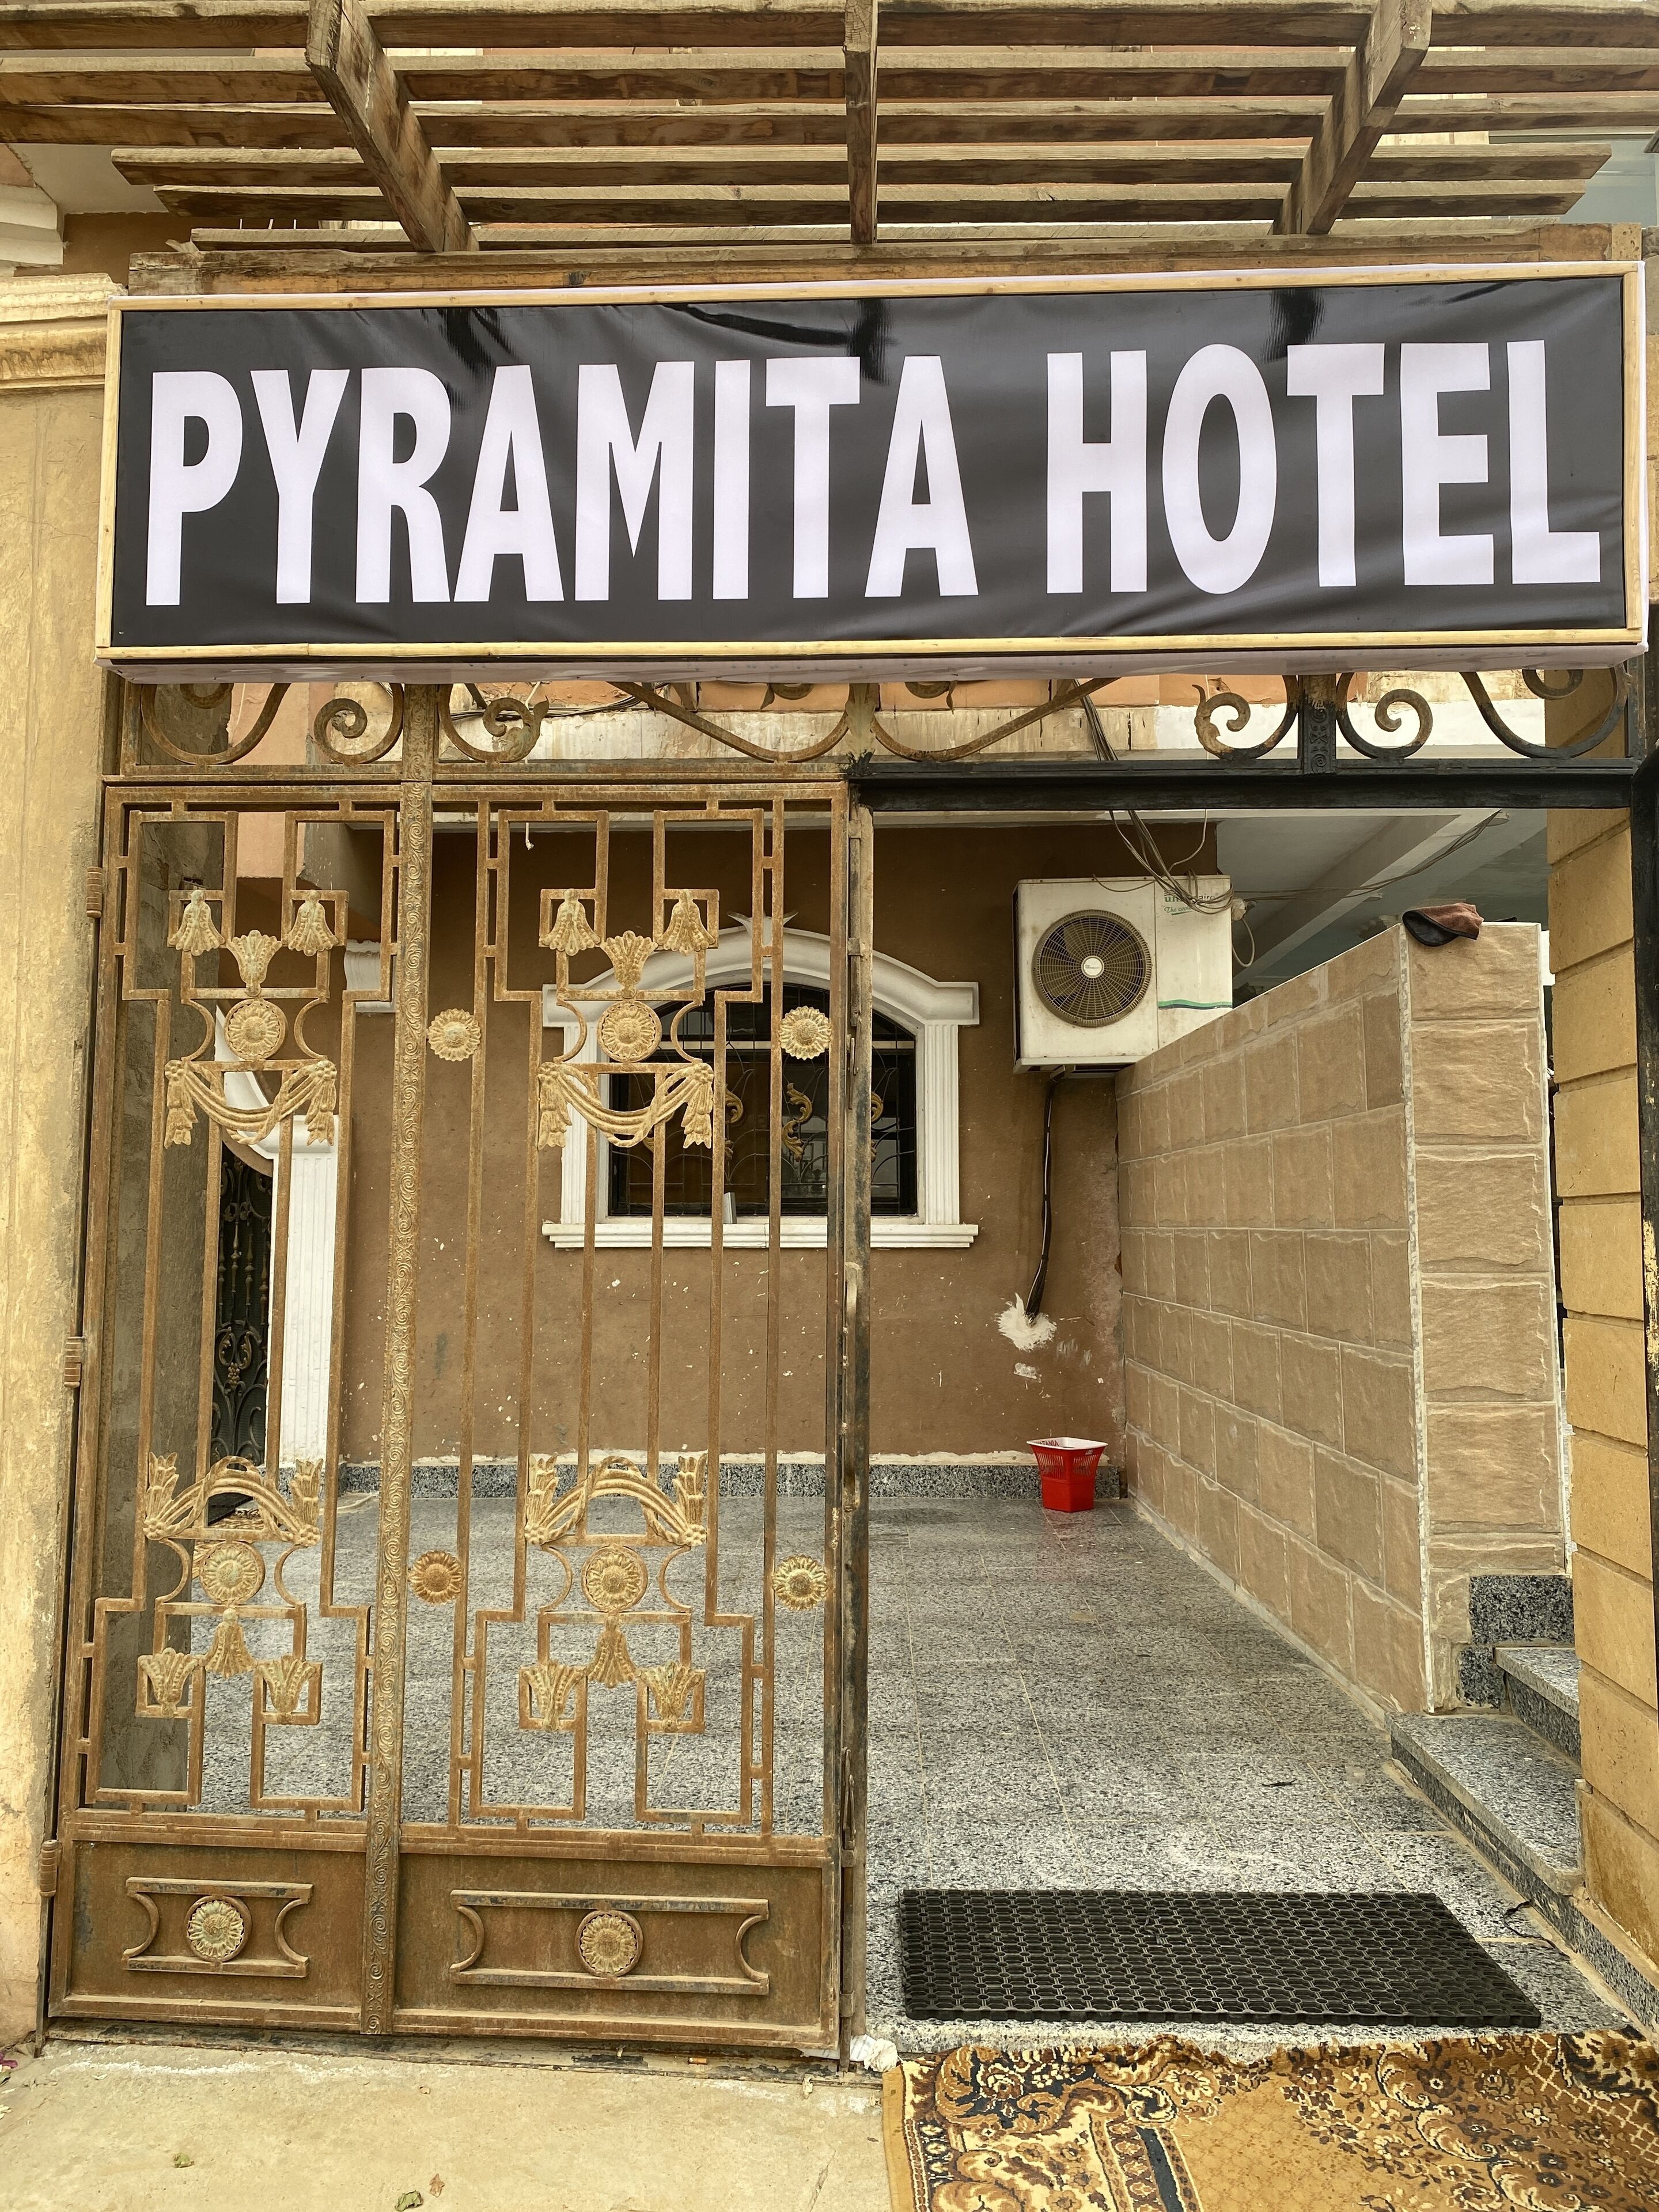 Pyramita Hotel